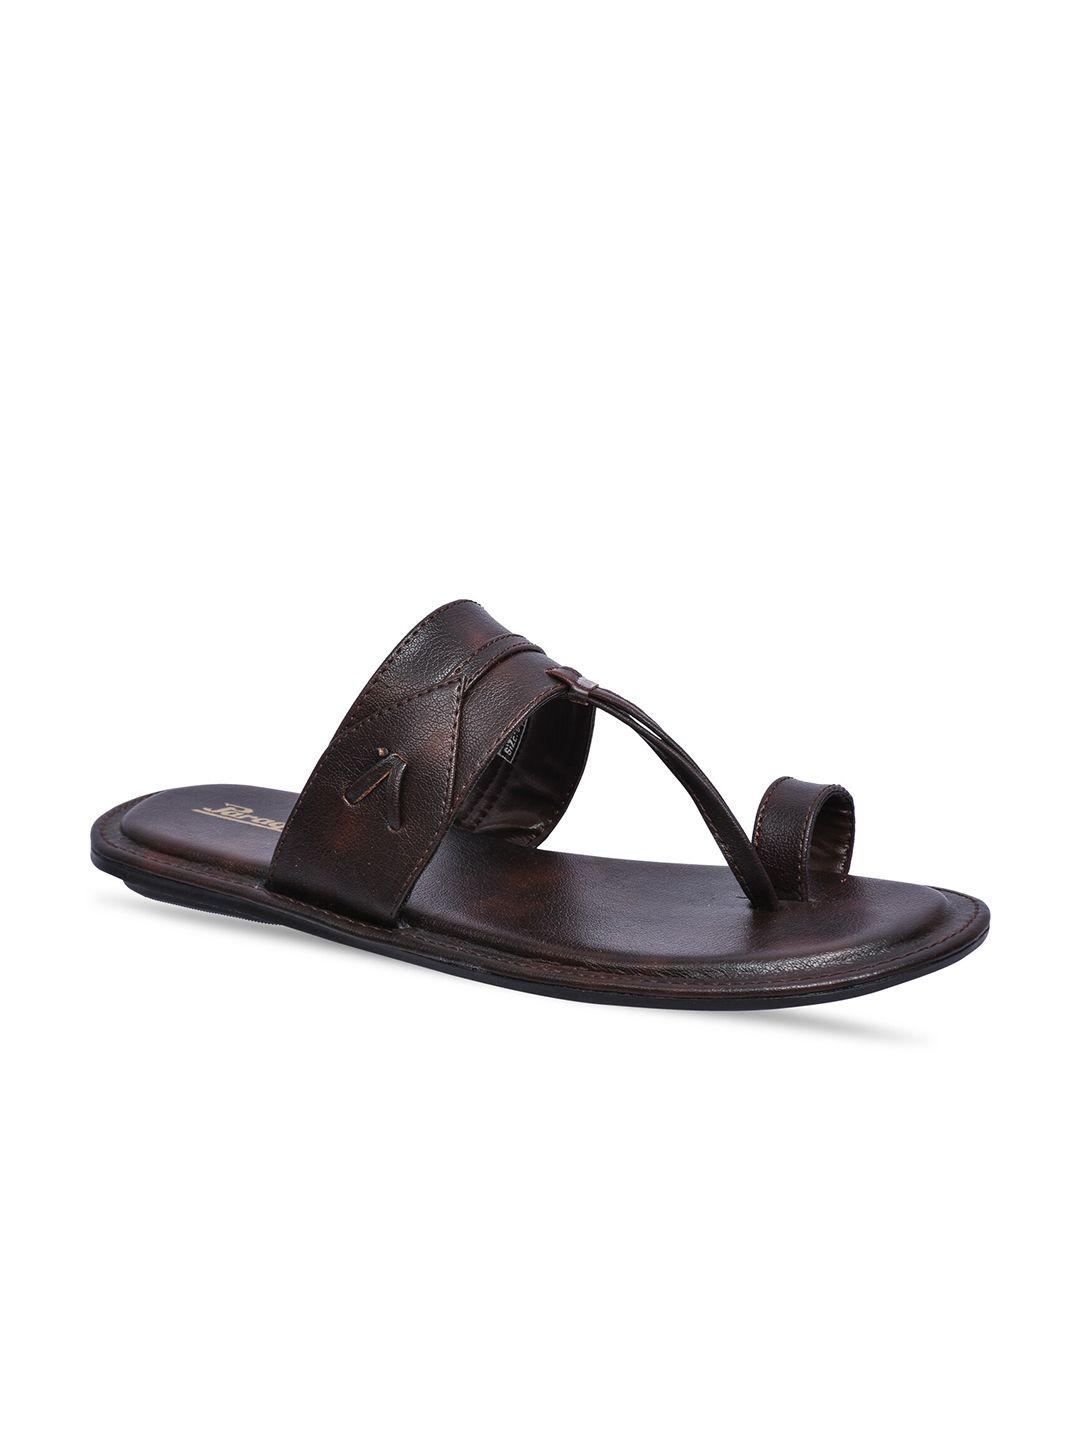 paragon lightweight comfort sandals